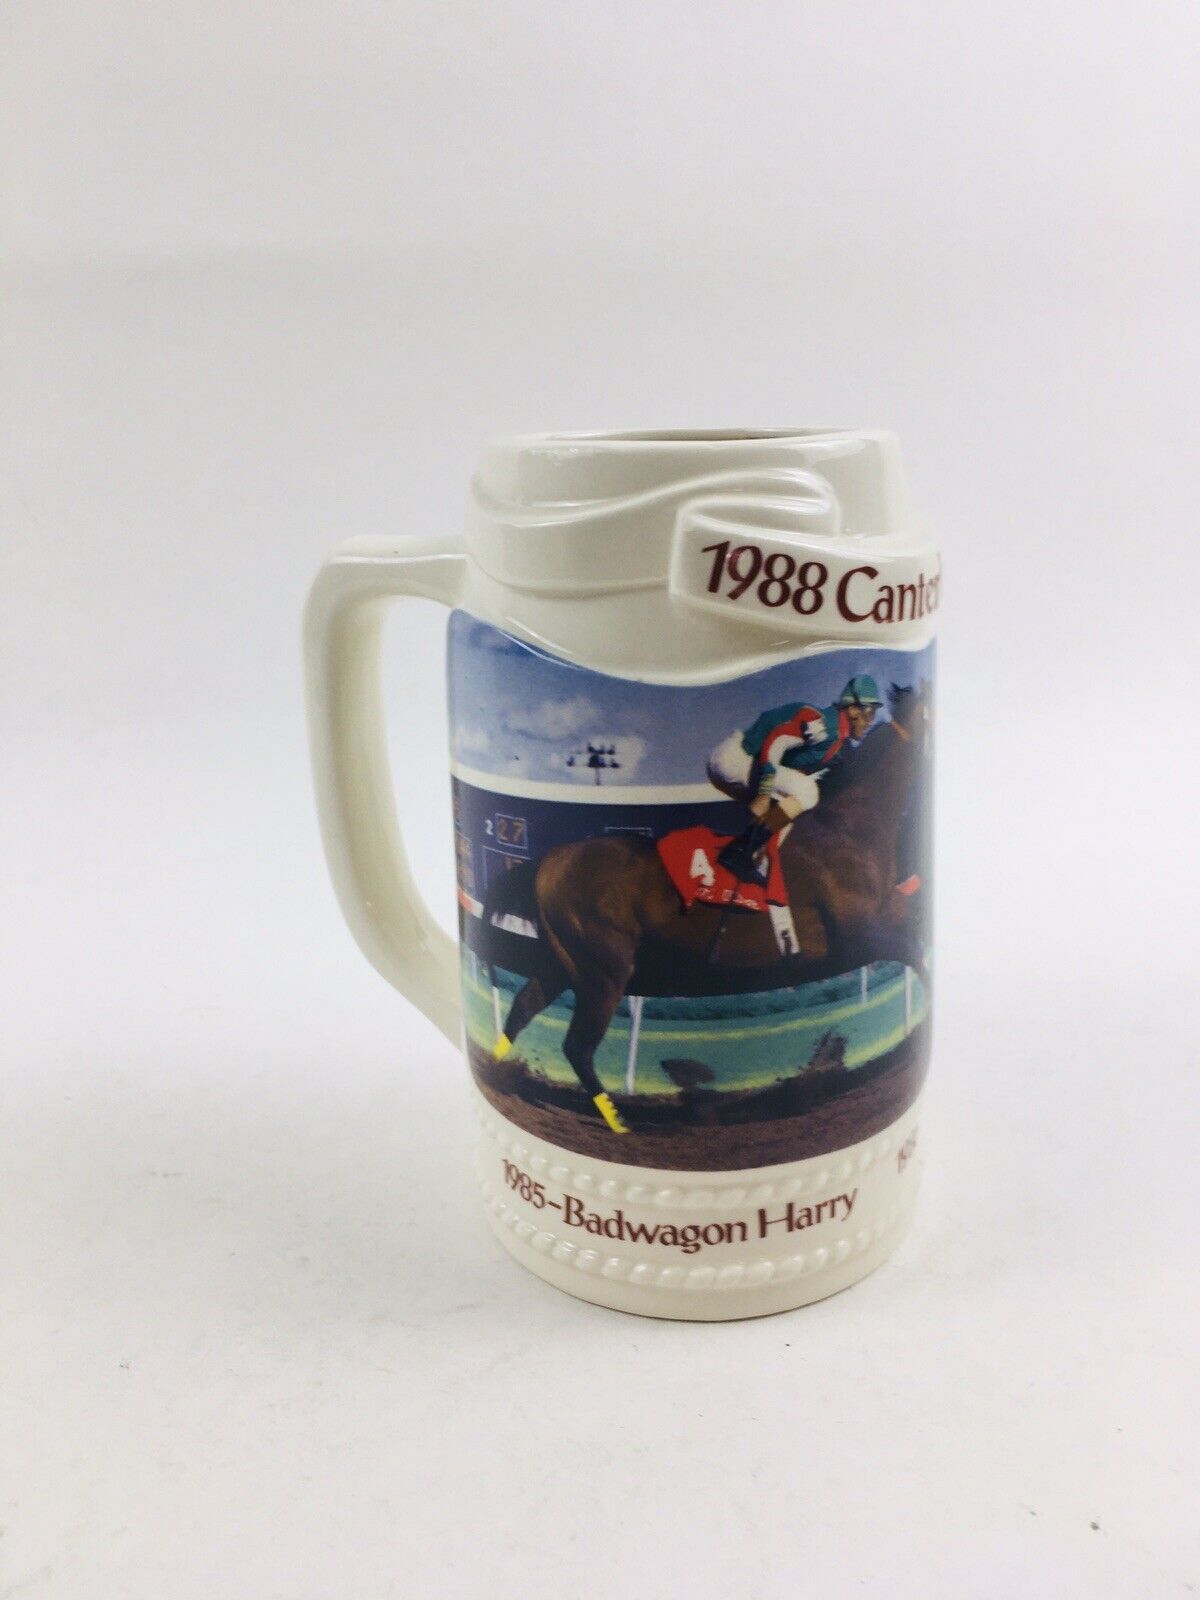 1988 Canterbury Downs Commemorative Cup/Stein 1985-Badwagon Harry Coffee Mug